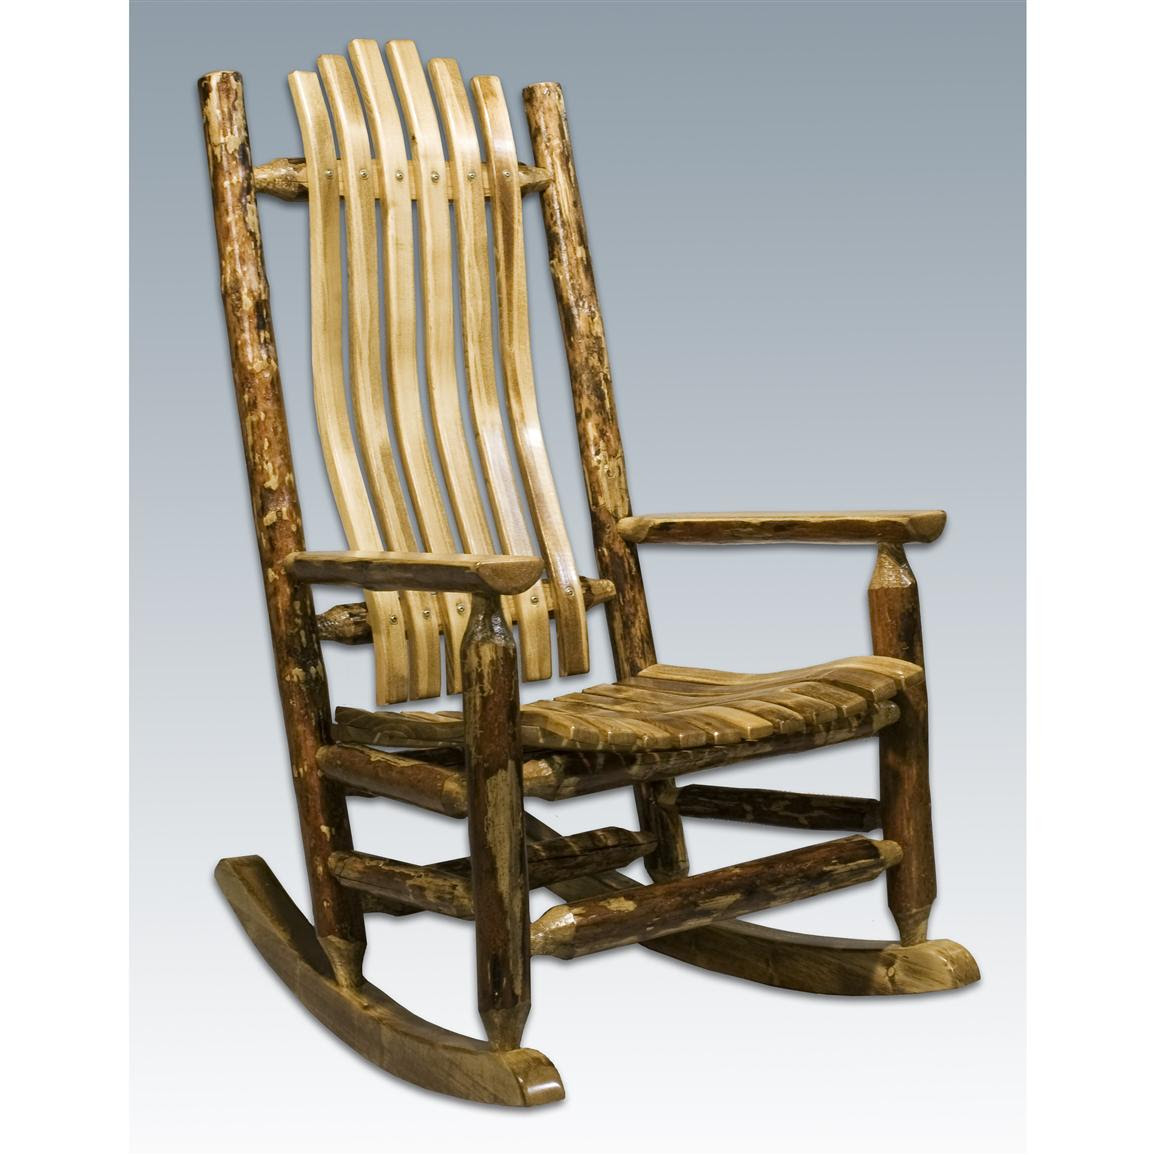 Log Rocking Chair Plans Inspirations ~ Home &amp; Interior Design